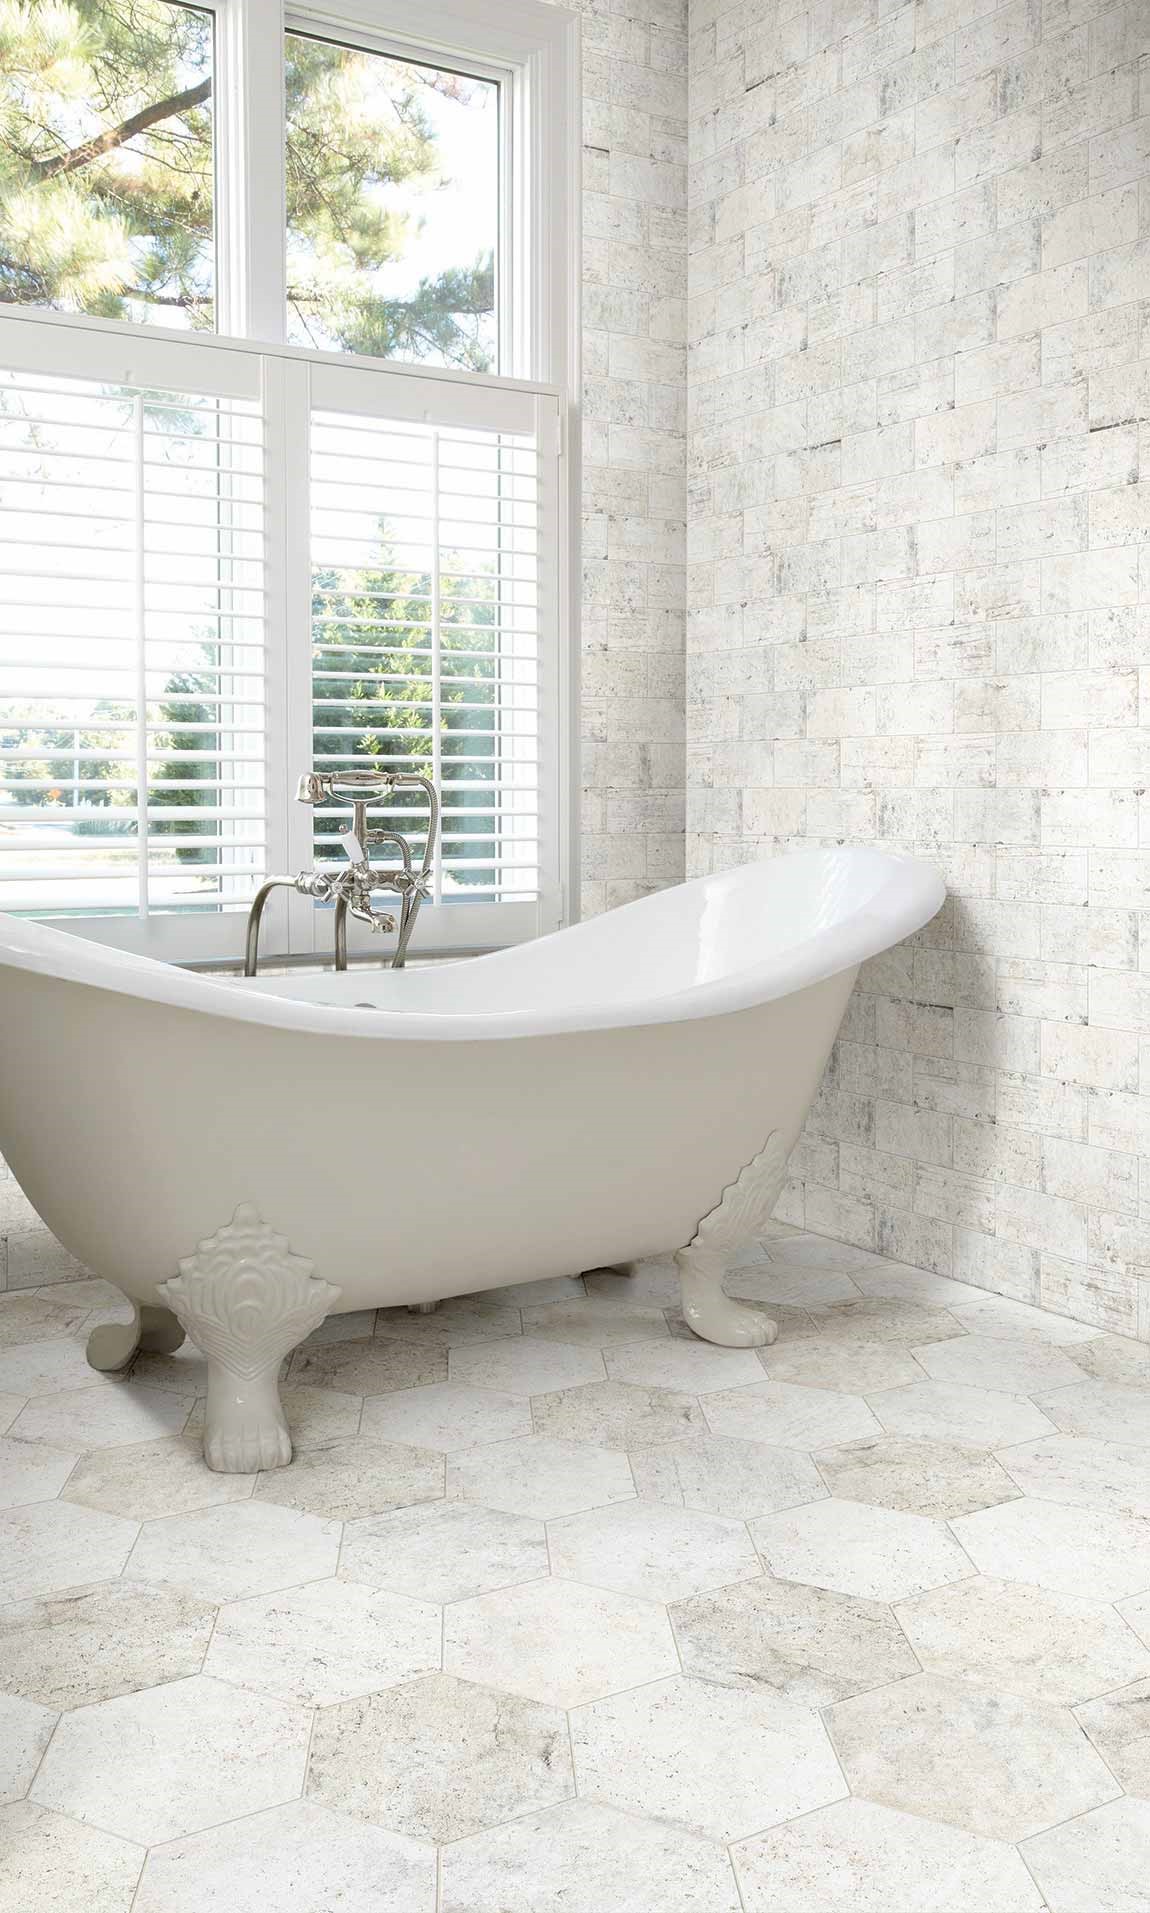 freestanding bathtub in light colored bathroom with ceramic tile